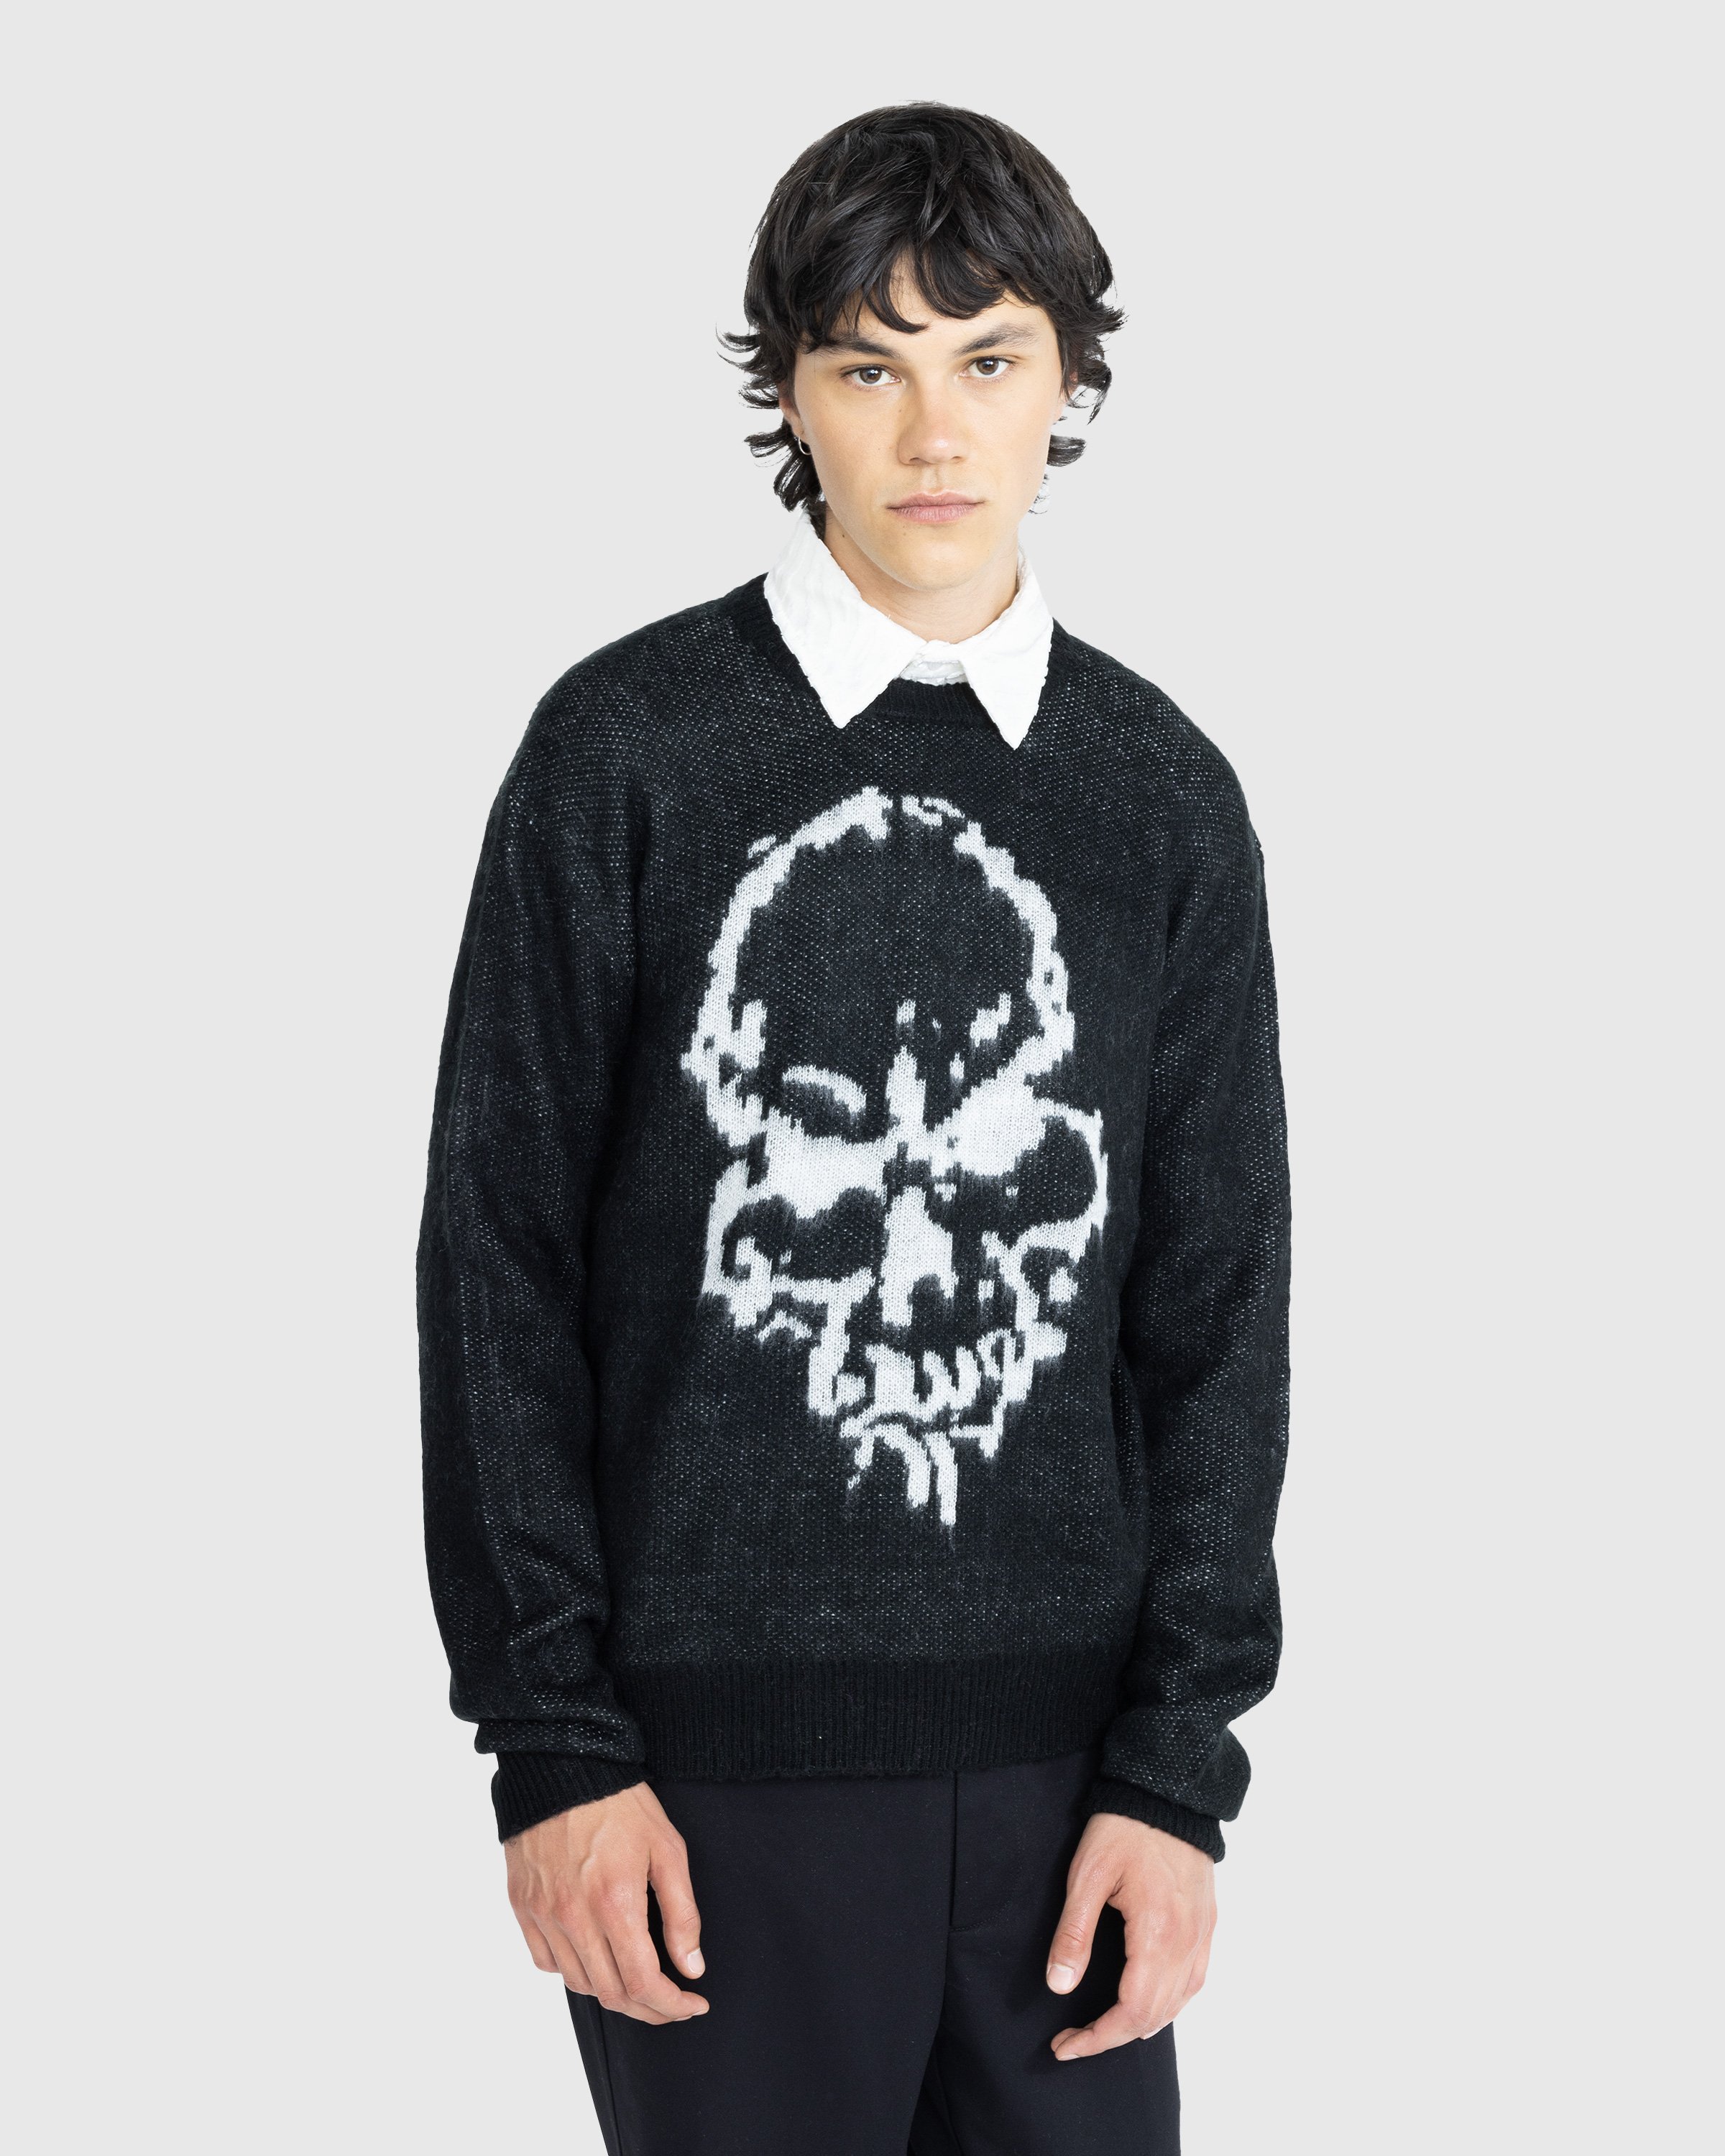 Noon Goons - Gatekeeper Sweater Black - Clothing - Black - Image 2